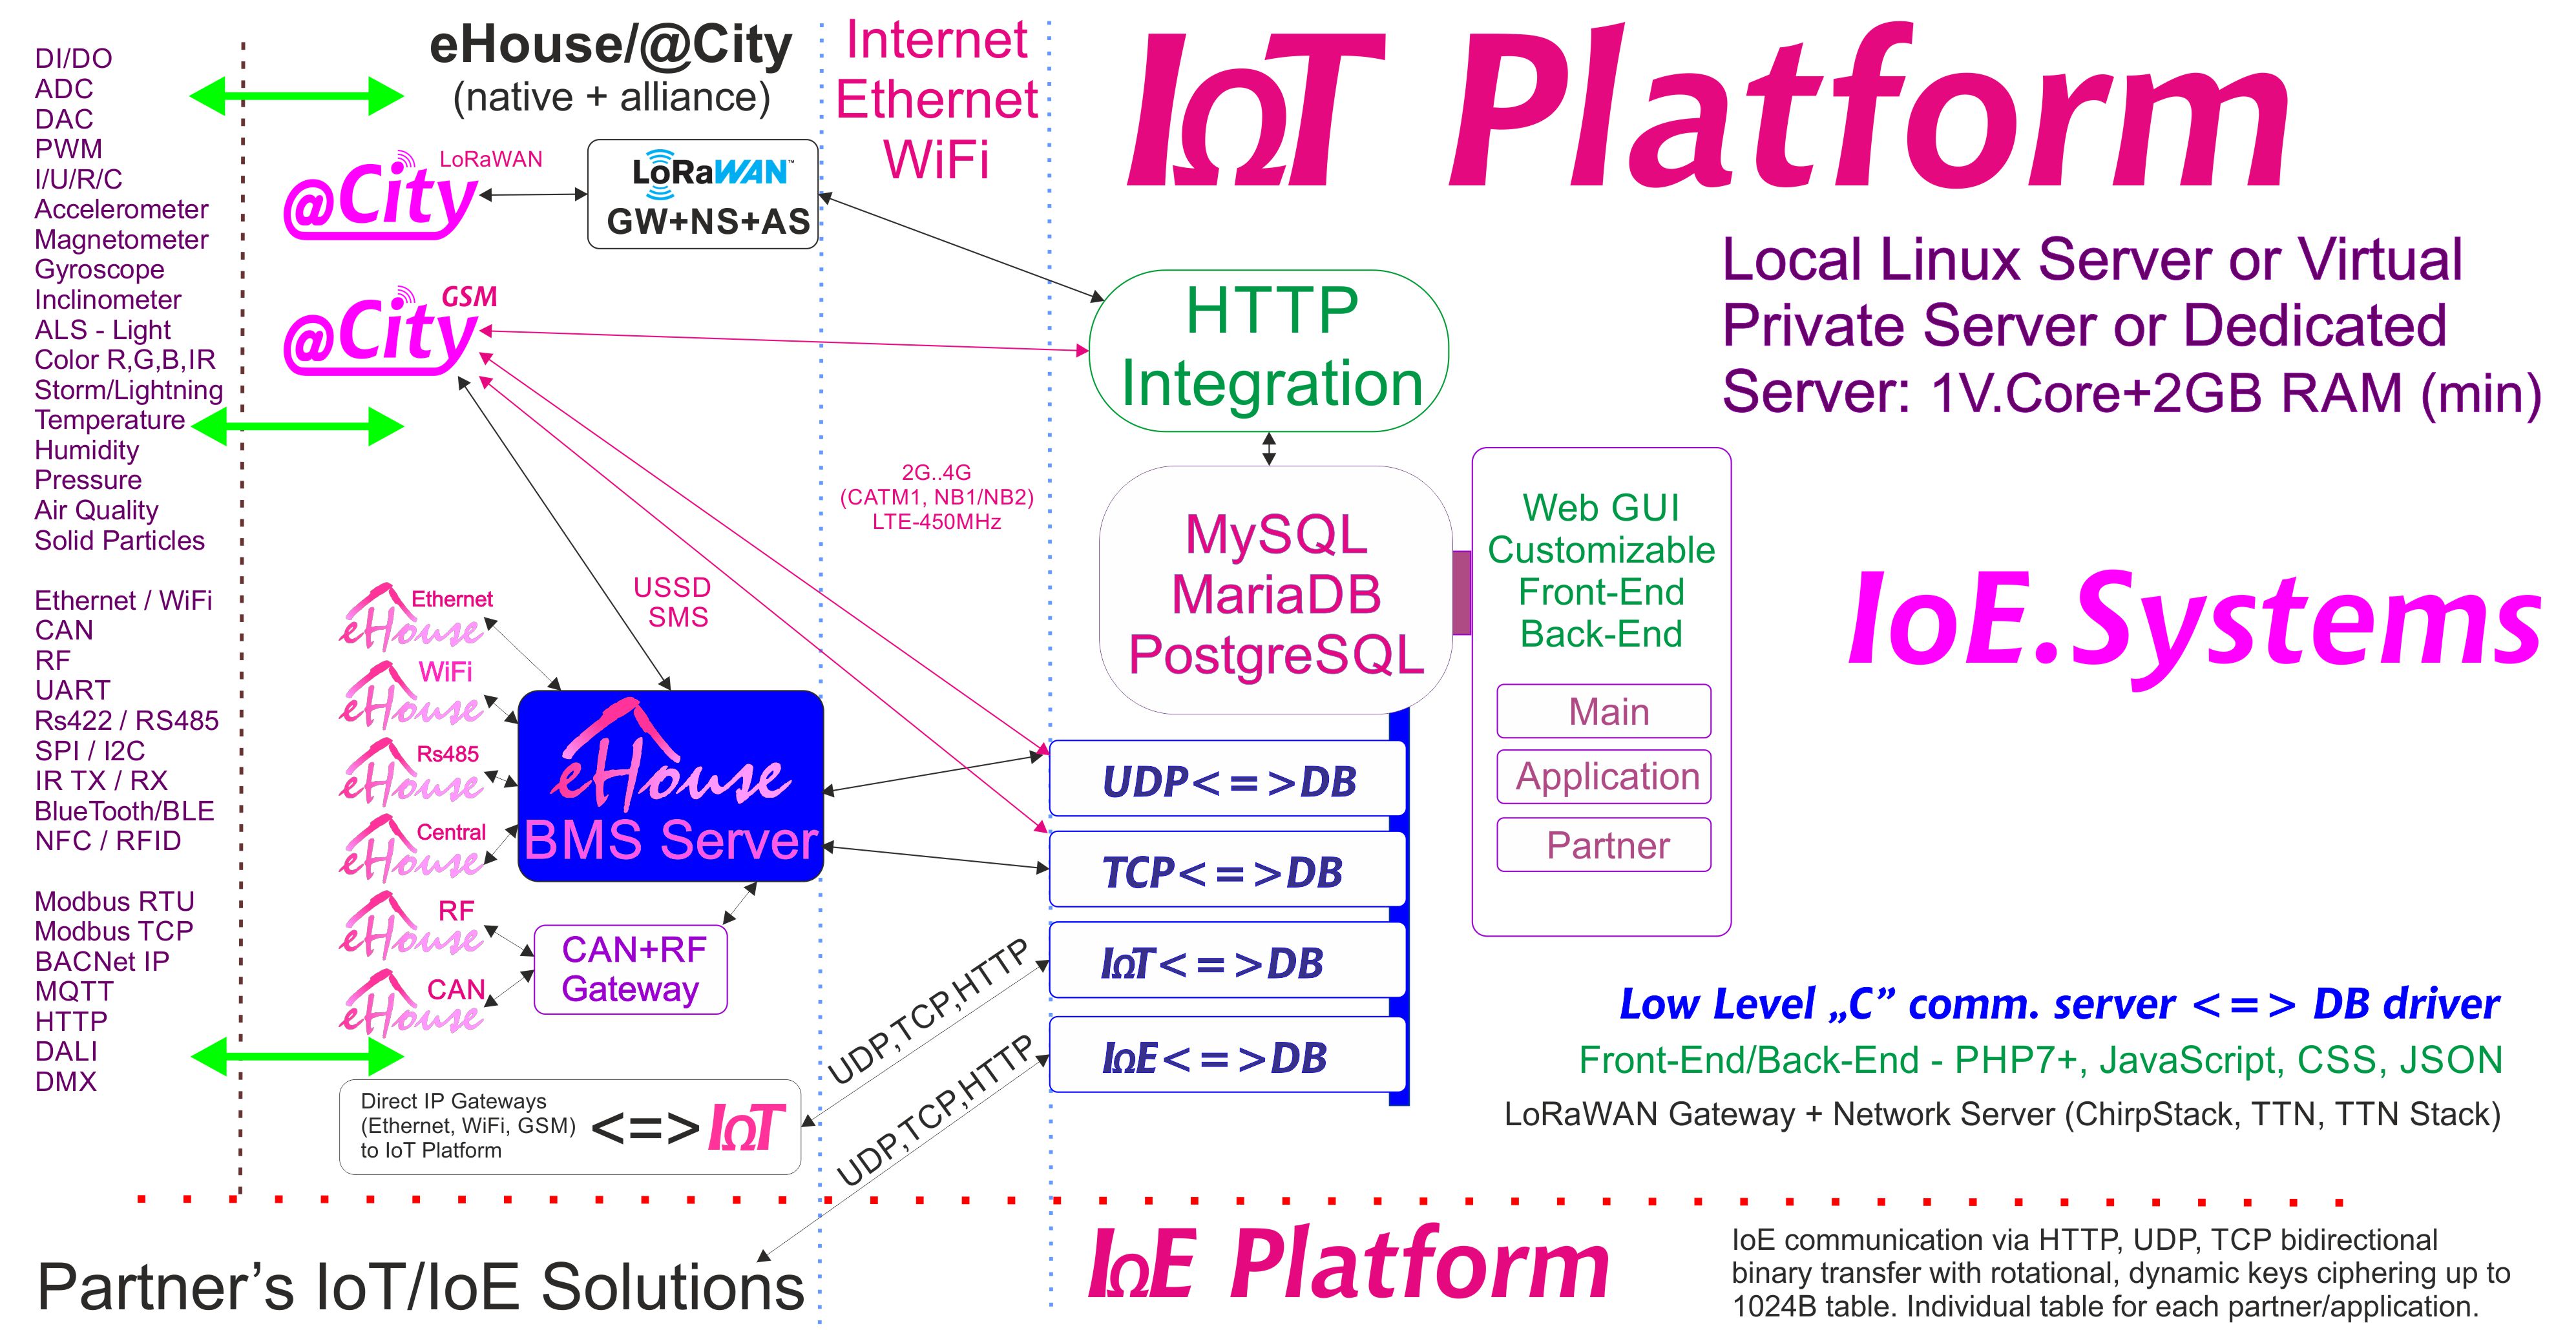 eHouse, software eCity Server BAS, BMS, IoE, sisteme și platformă IoT